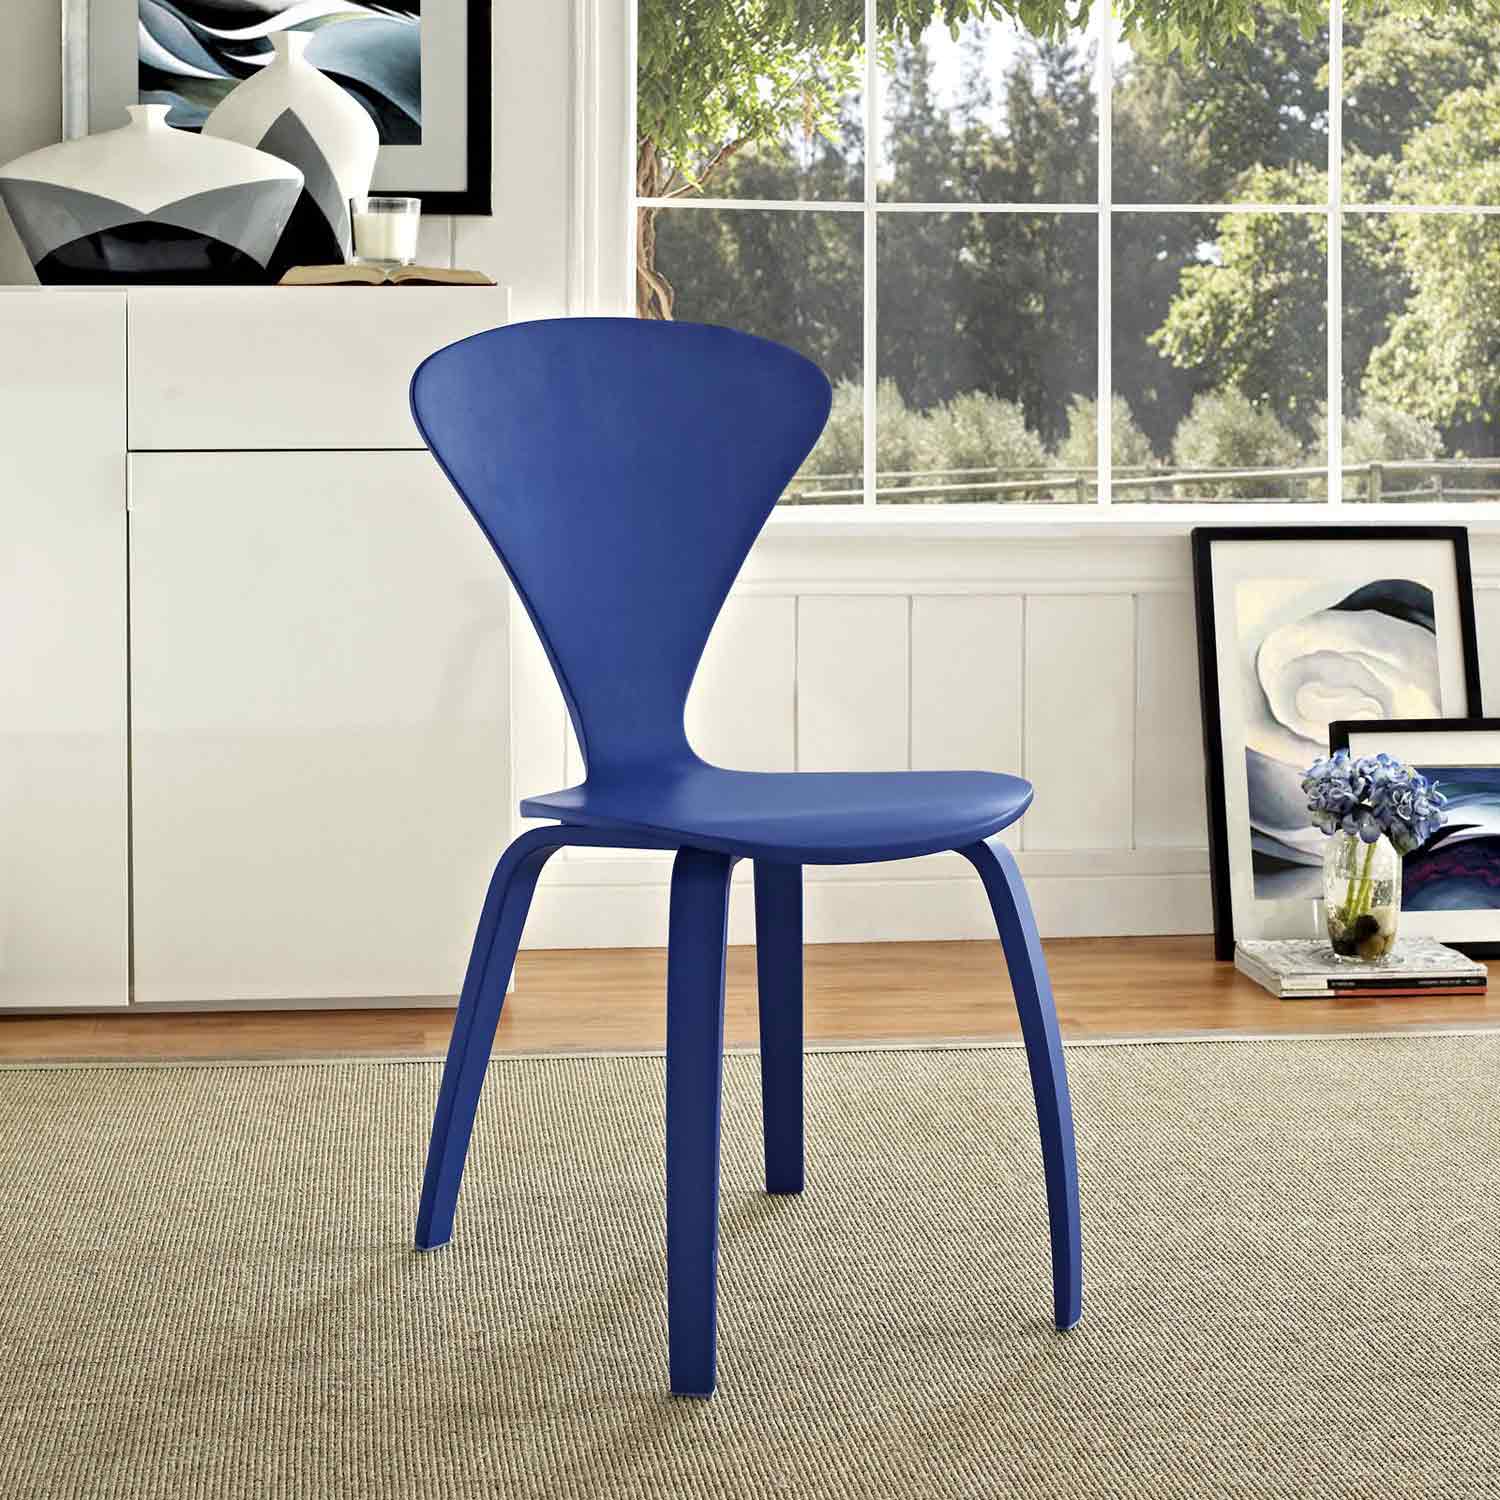 Modway Vortex Dining Side Chair - Blue